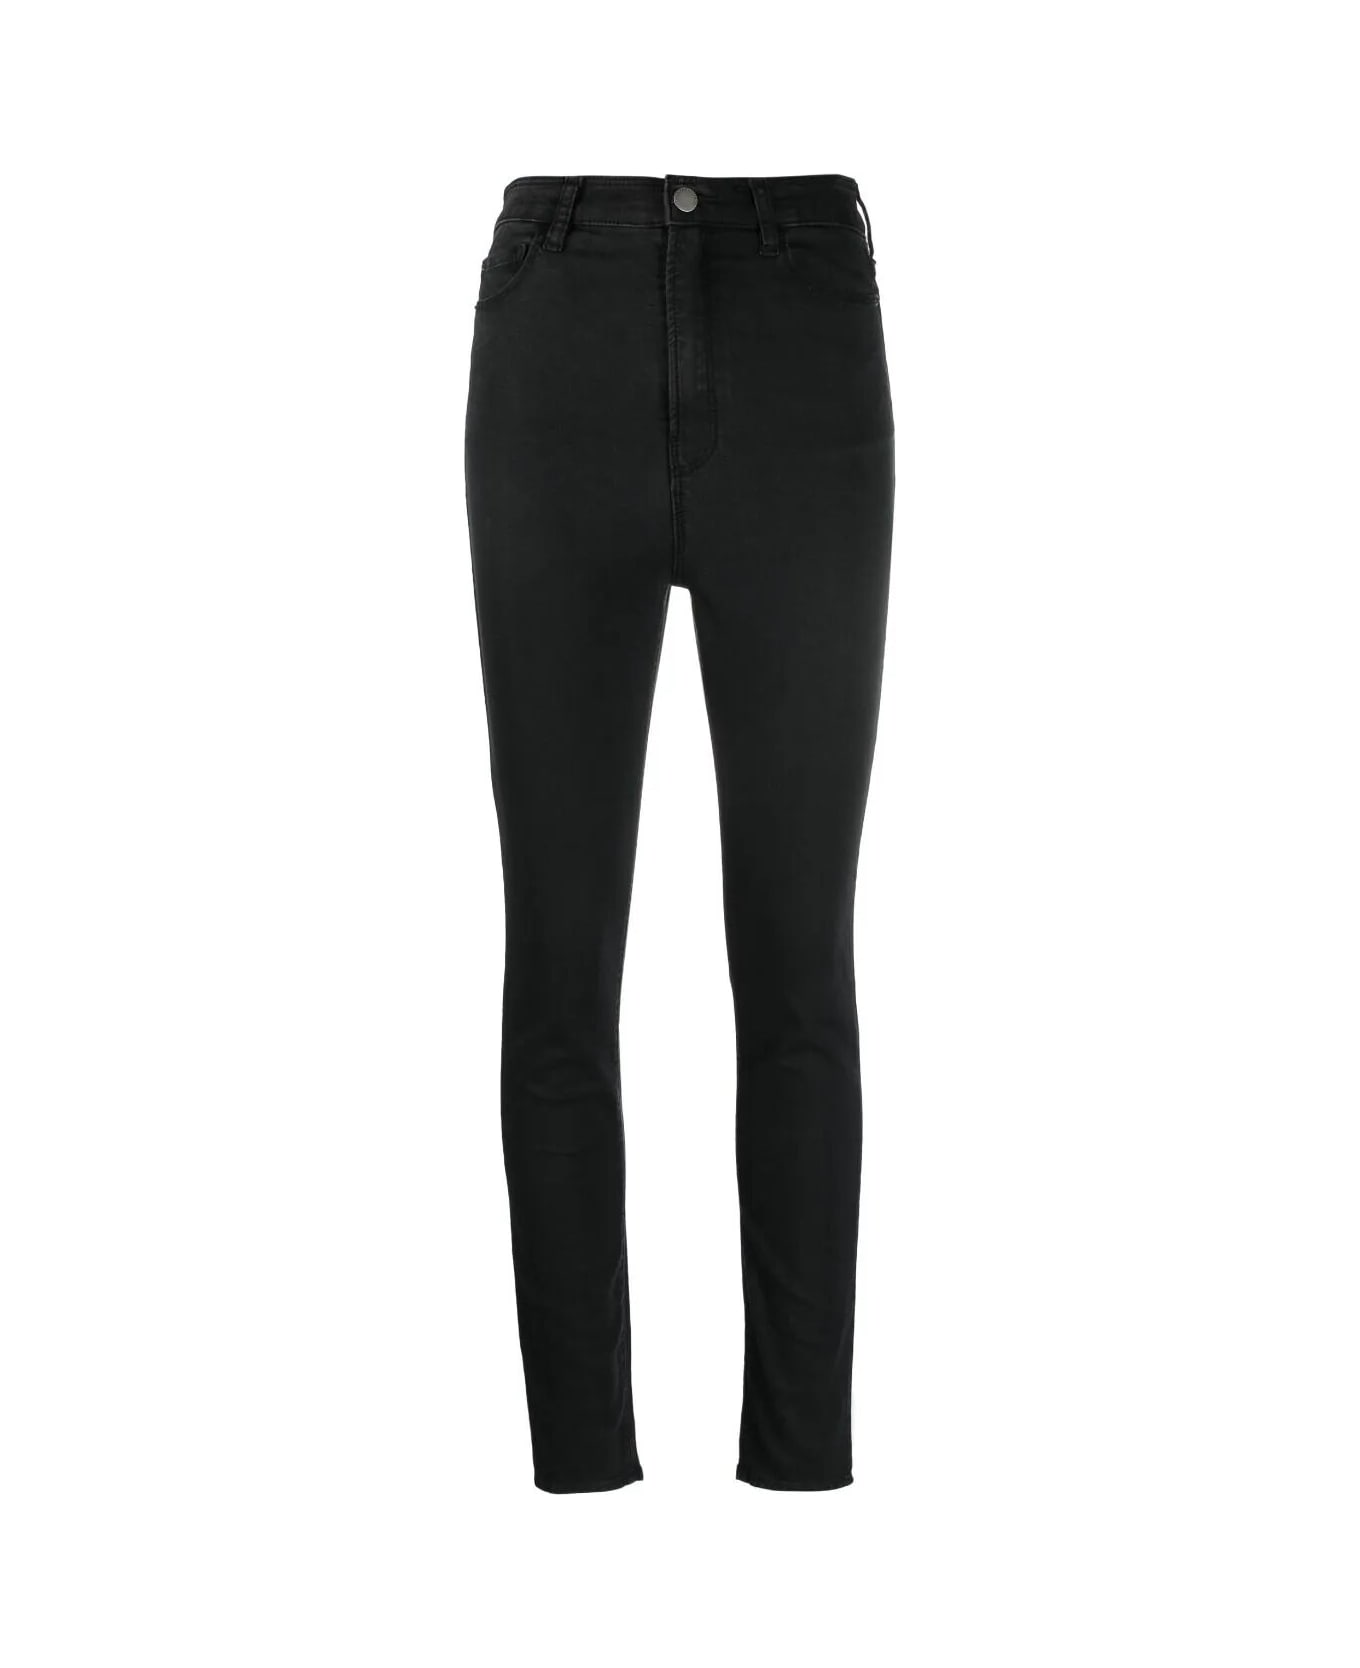 Emporio Armani Skinny Jeans - Denim Black